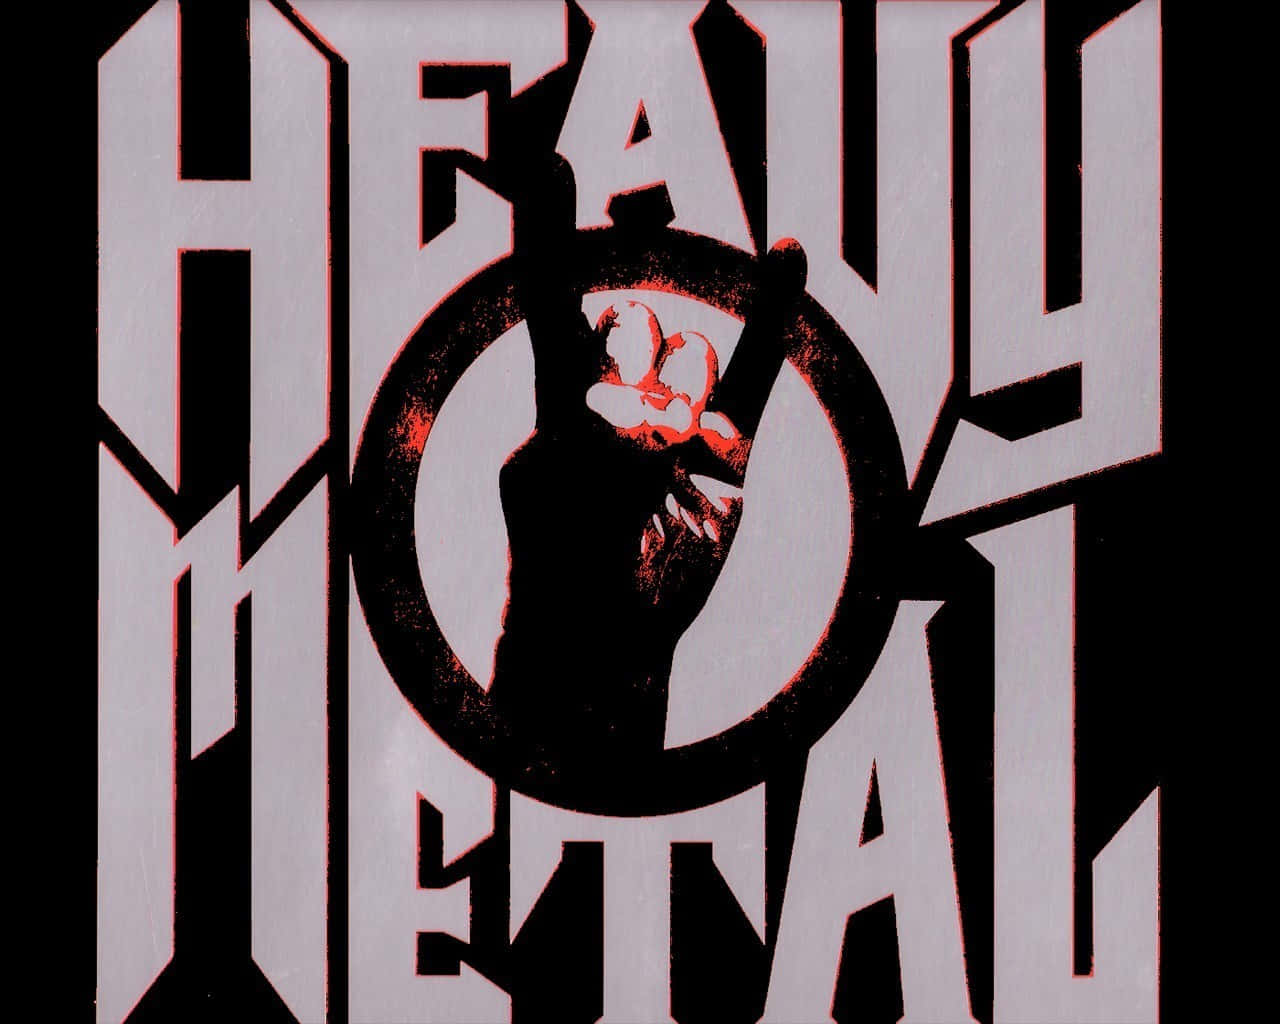 Heavy Metal [wallpaper] Wallpaper